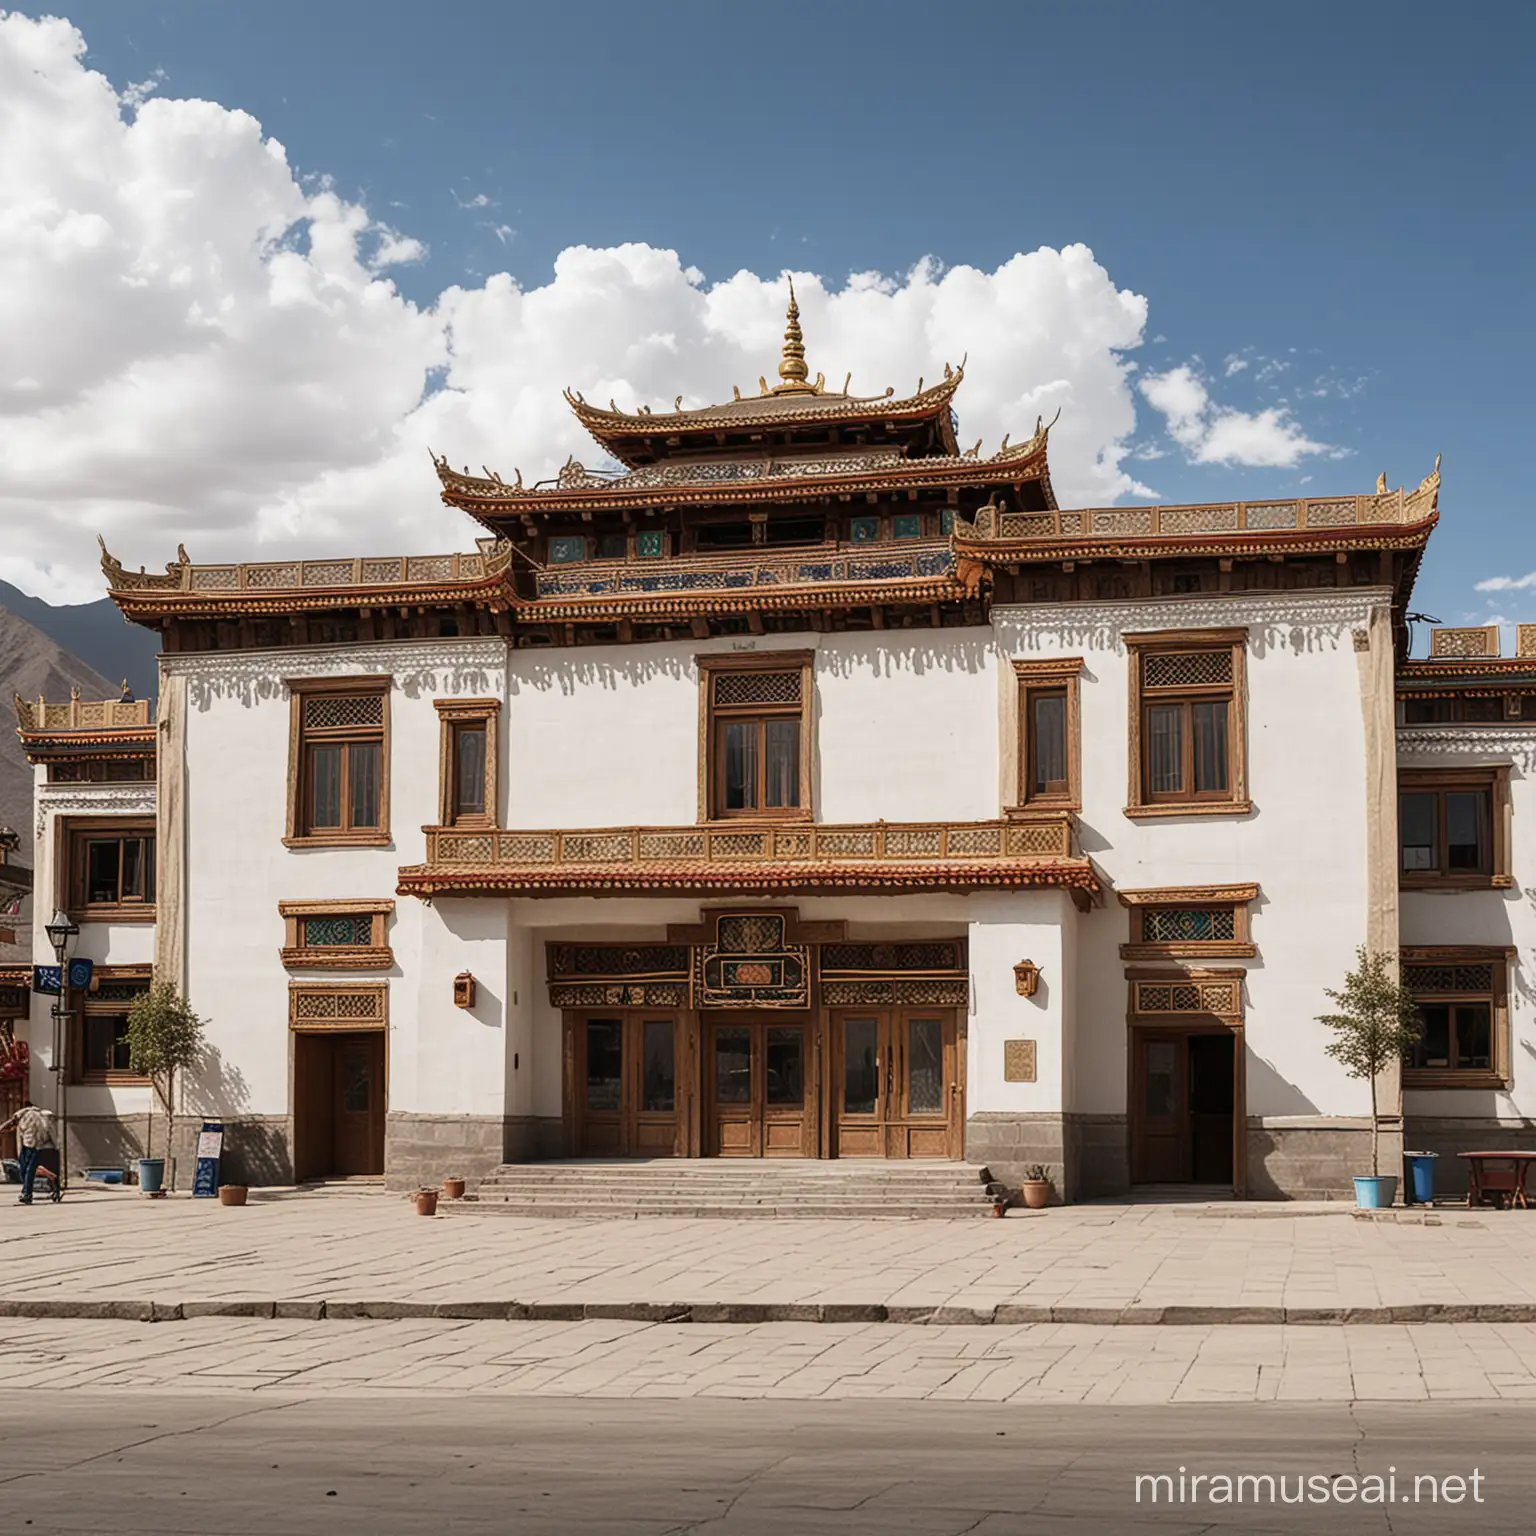 a cultural center builting , tibetan style

